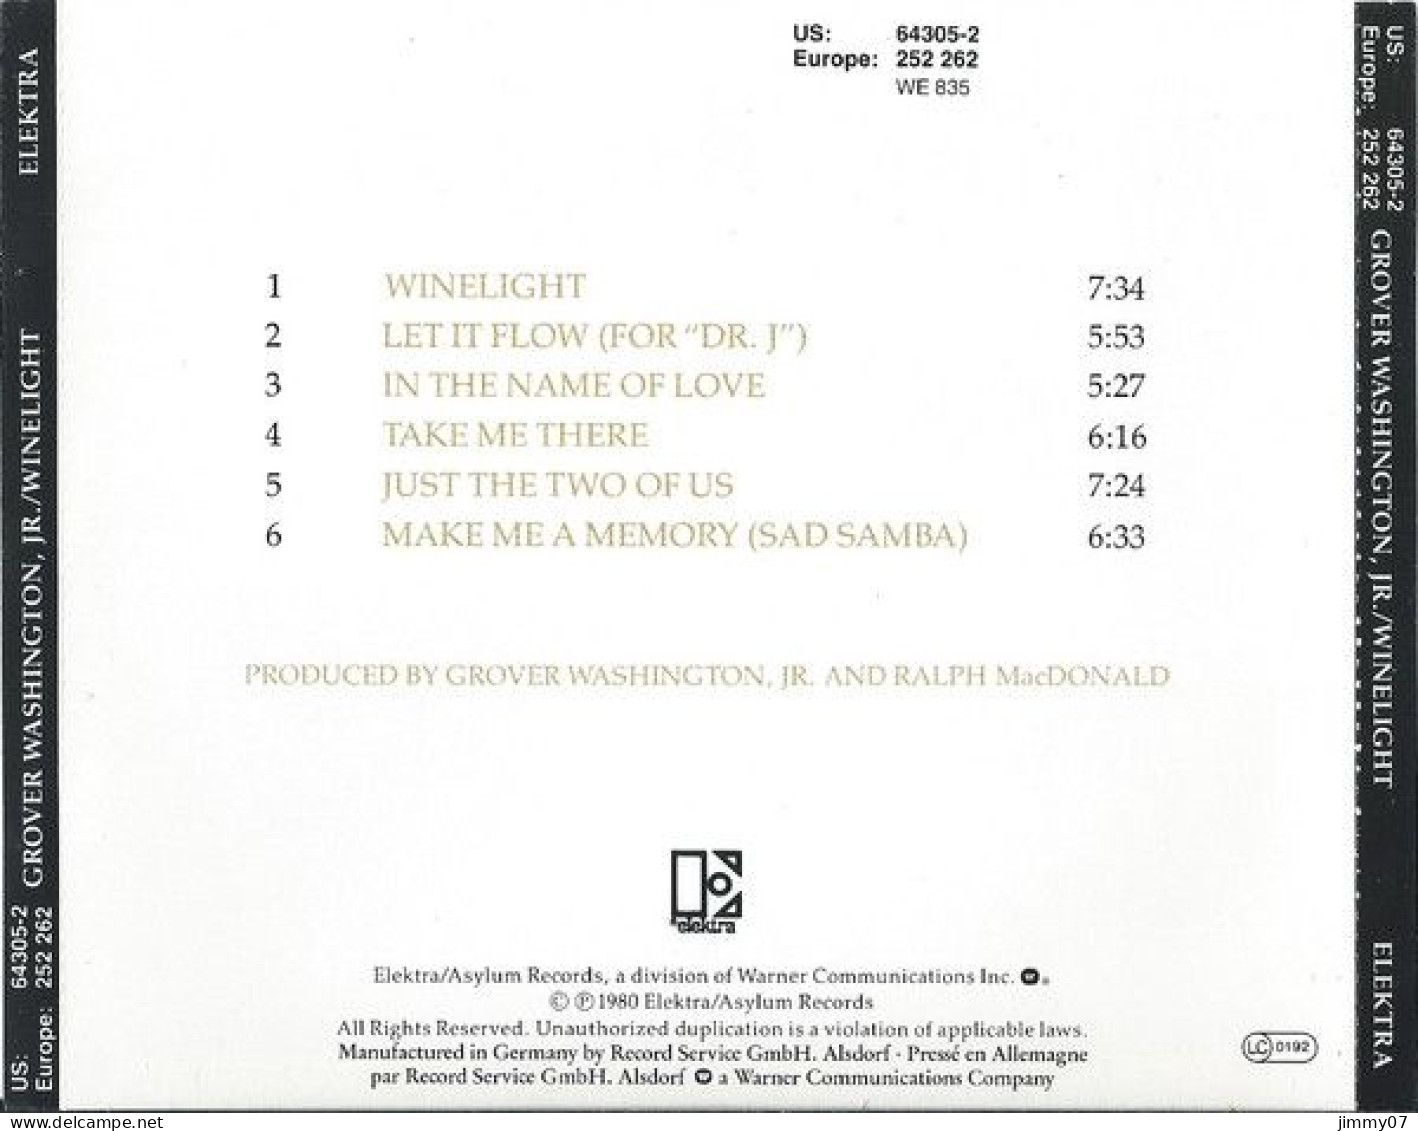 Grover Washington, Jr. - Winelight (CD, Album, RE) - Jazz